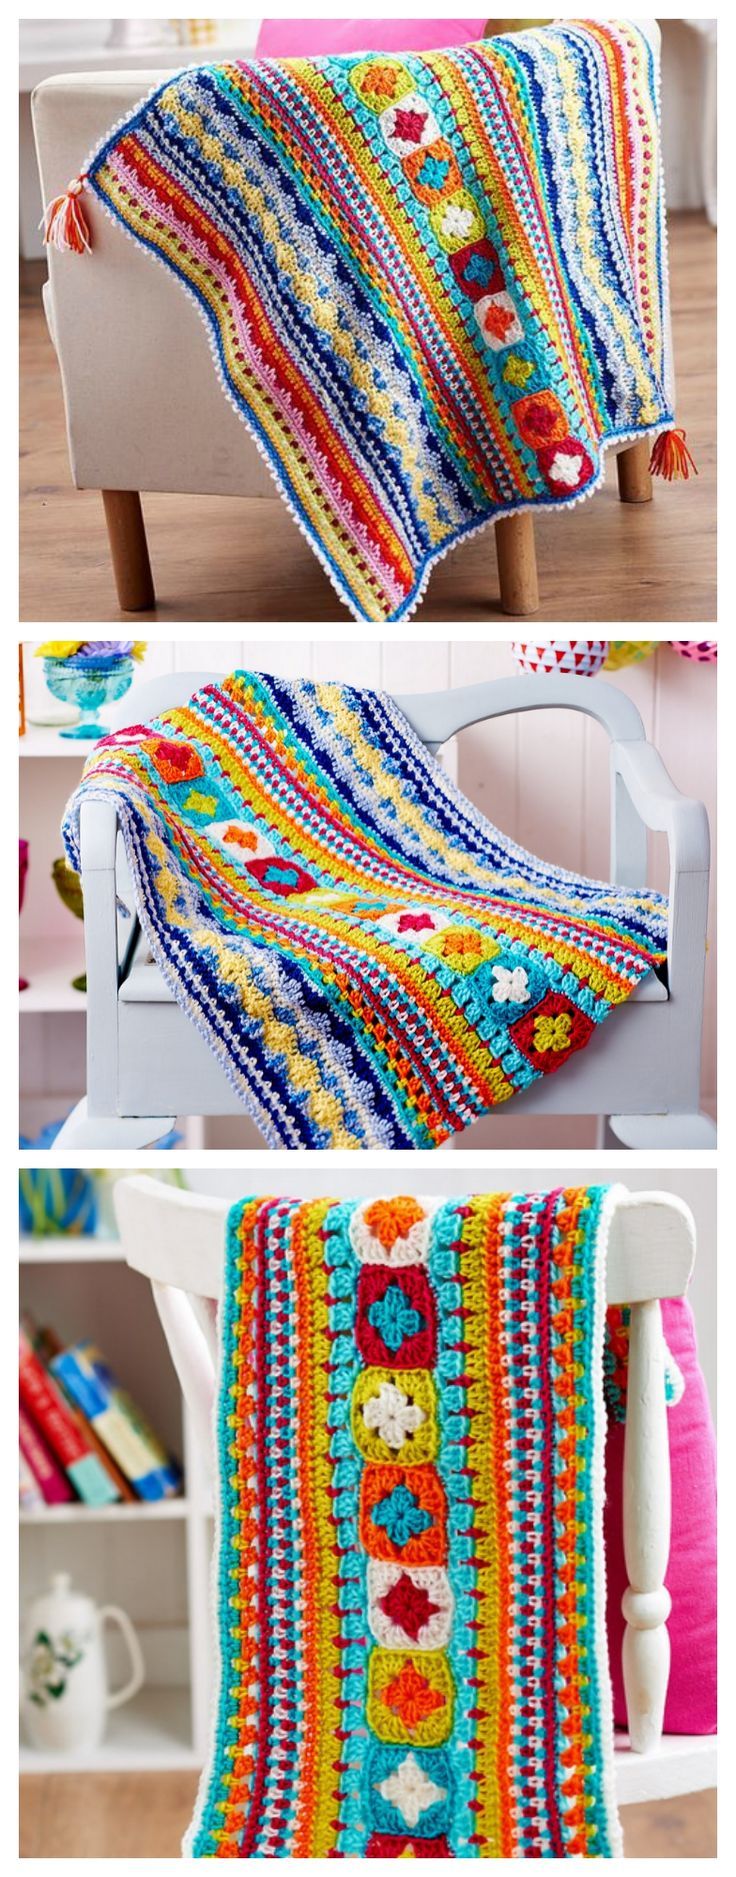 Sampler Blanket By Janine Holmes – Free Crochet Pattern With Website Registratio…